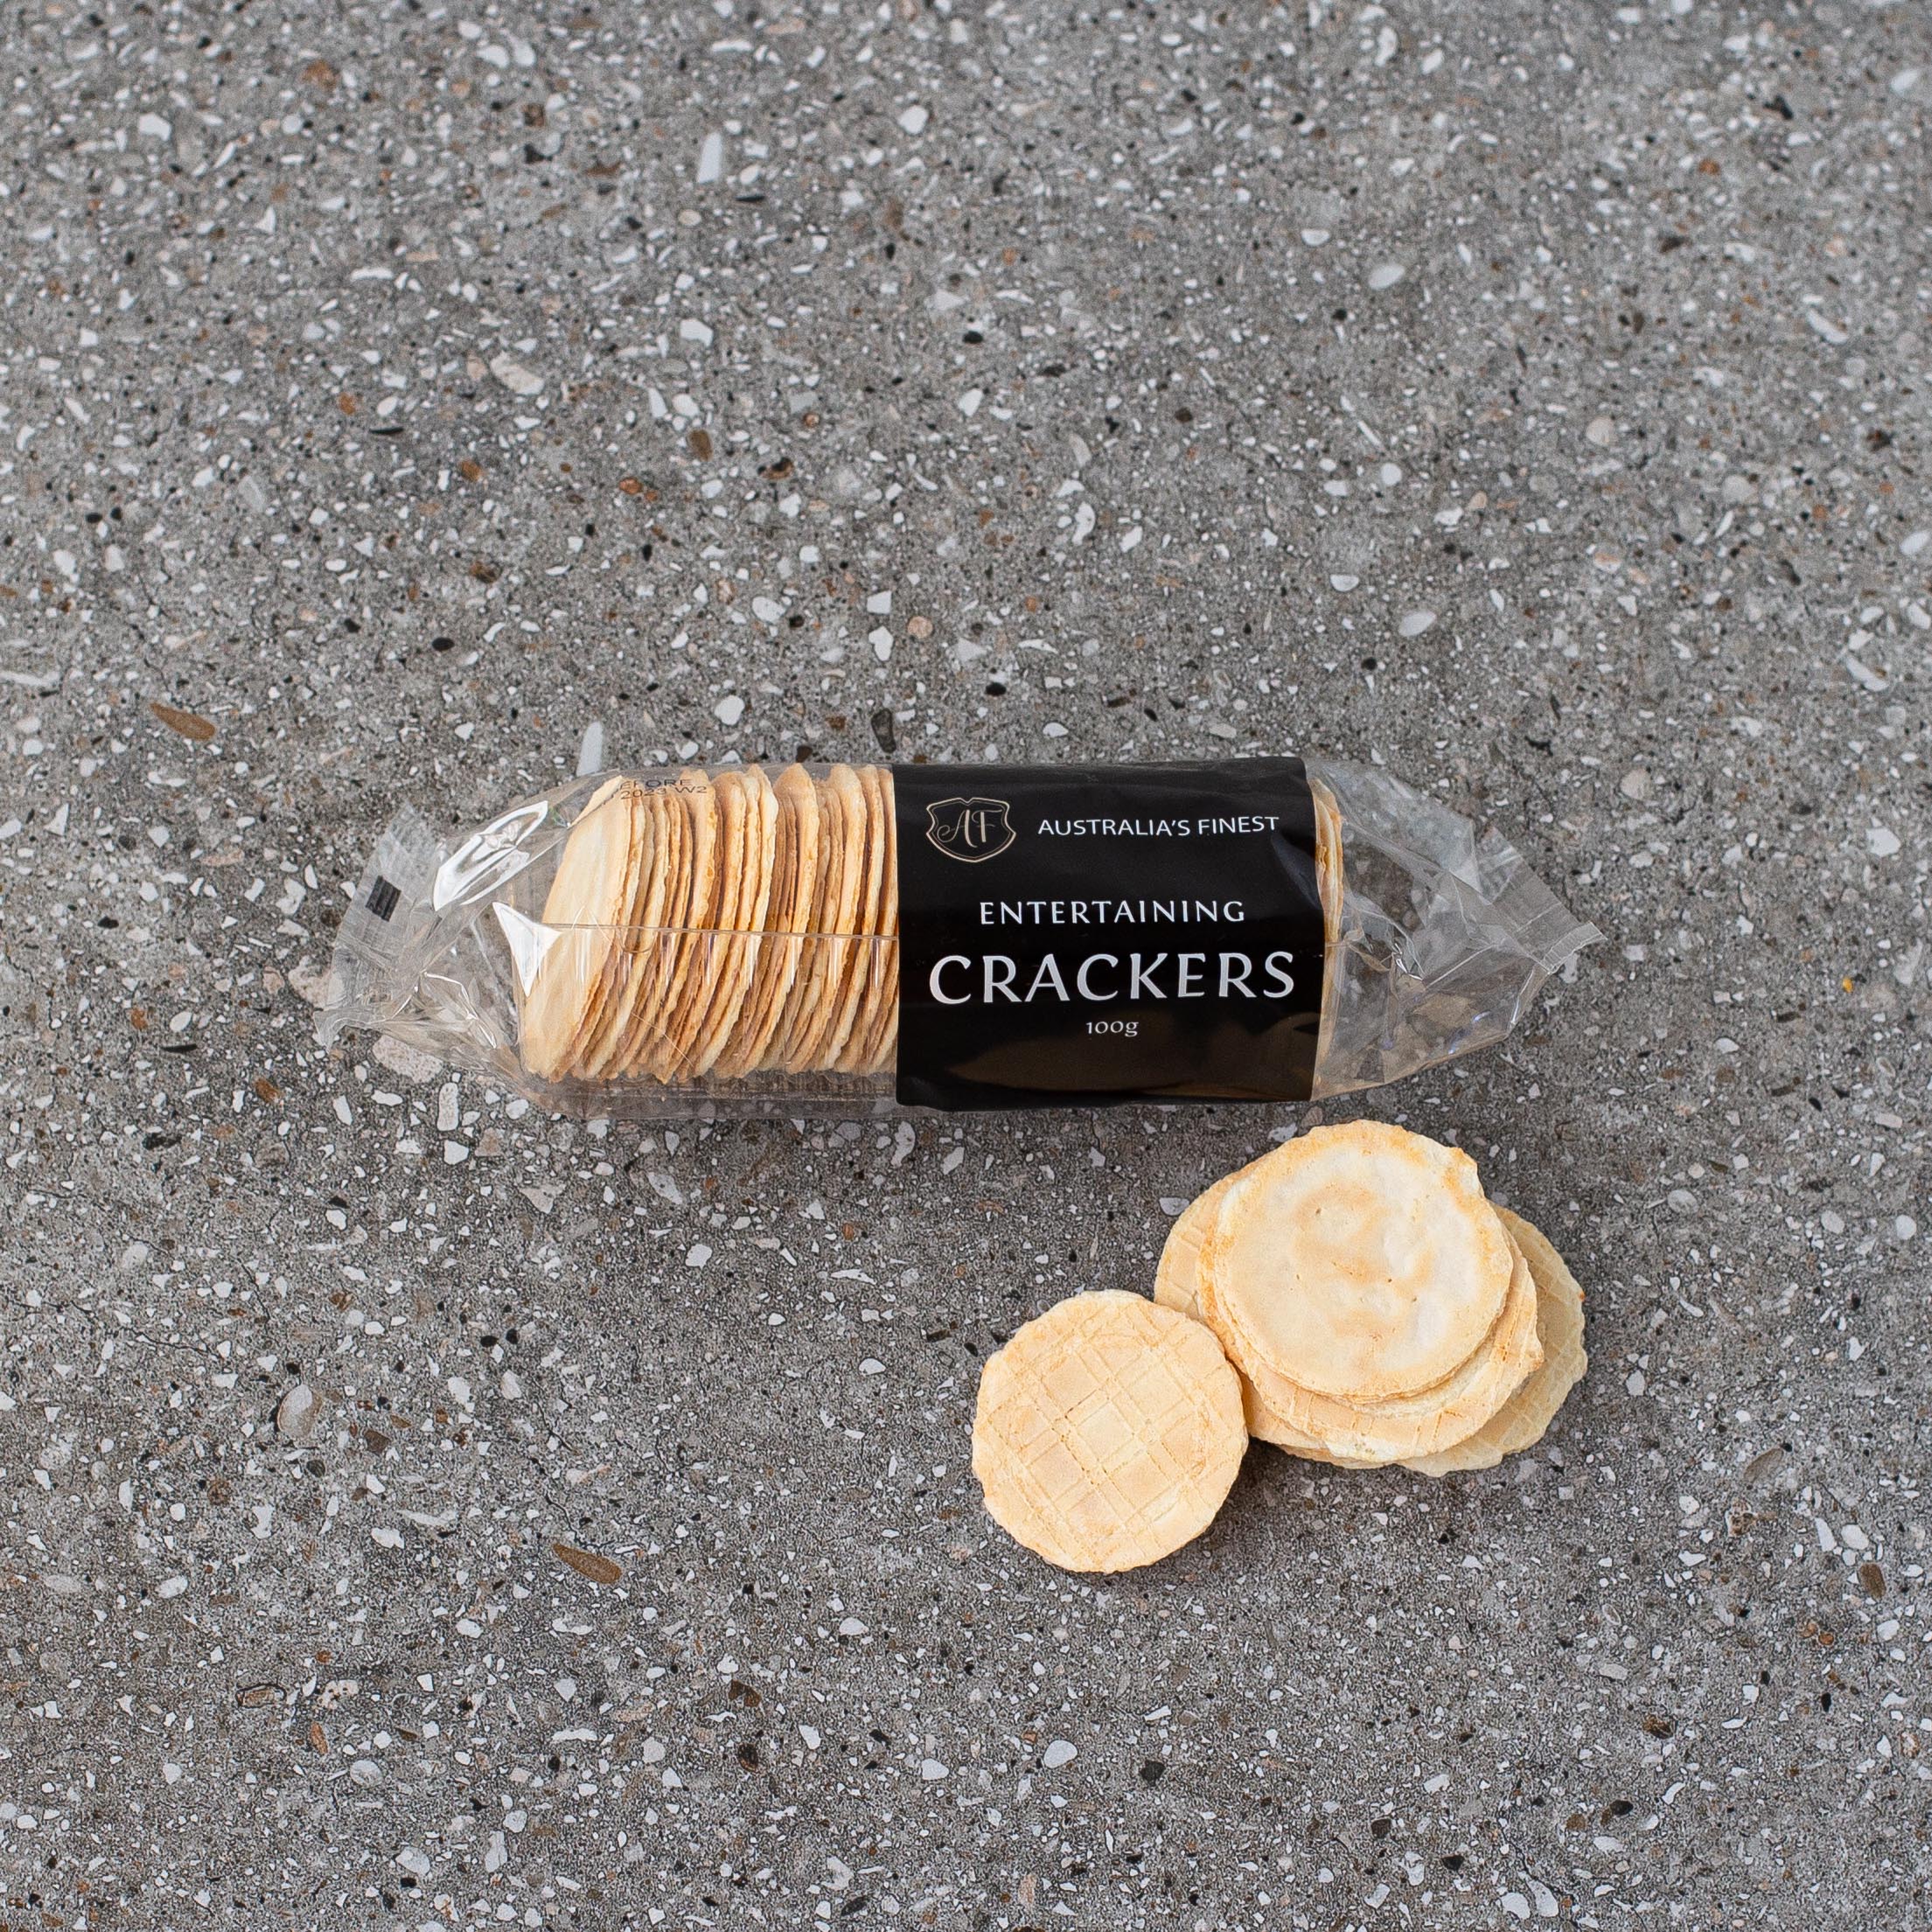 Australia's Finest Crackers